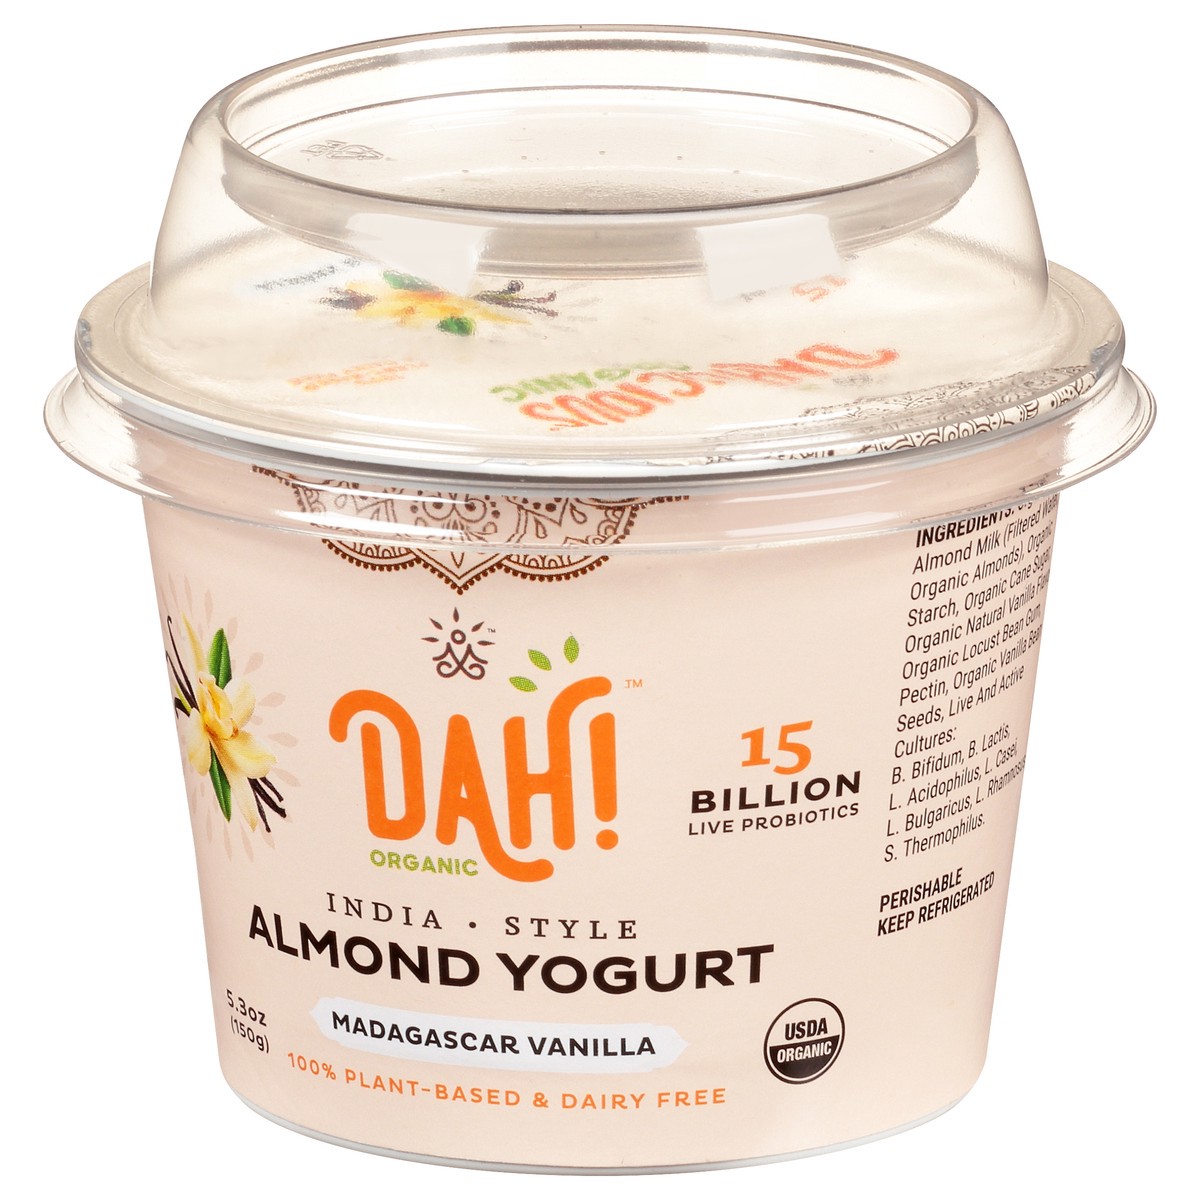 slide 9 of 13, Dahlicious Dah!™ organic almond yogurt, Madagascar vanilla, 5.3 oz